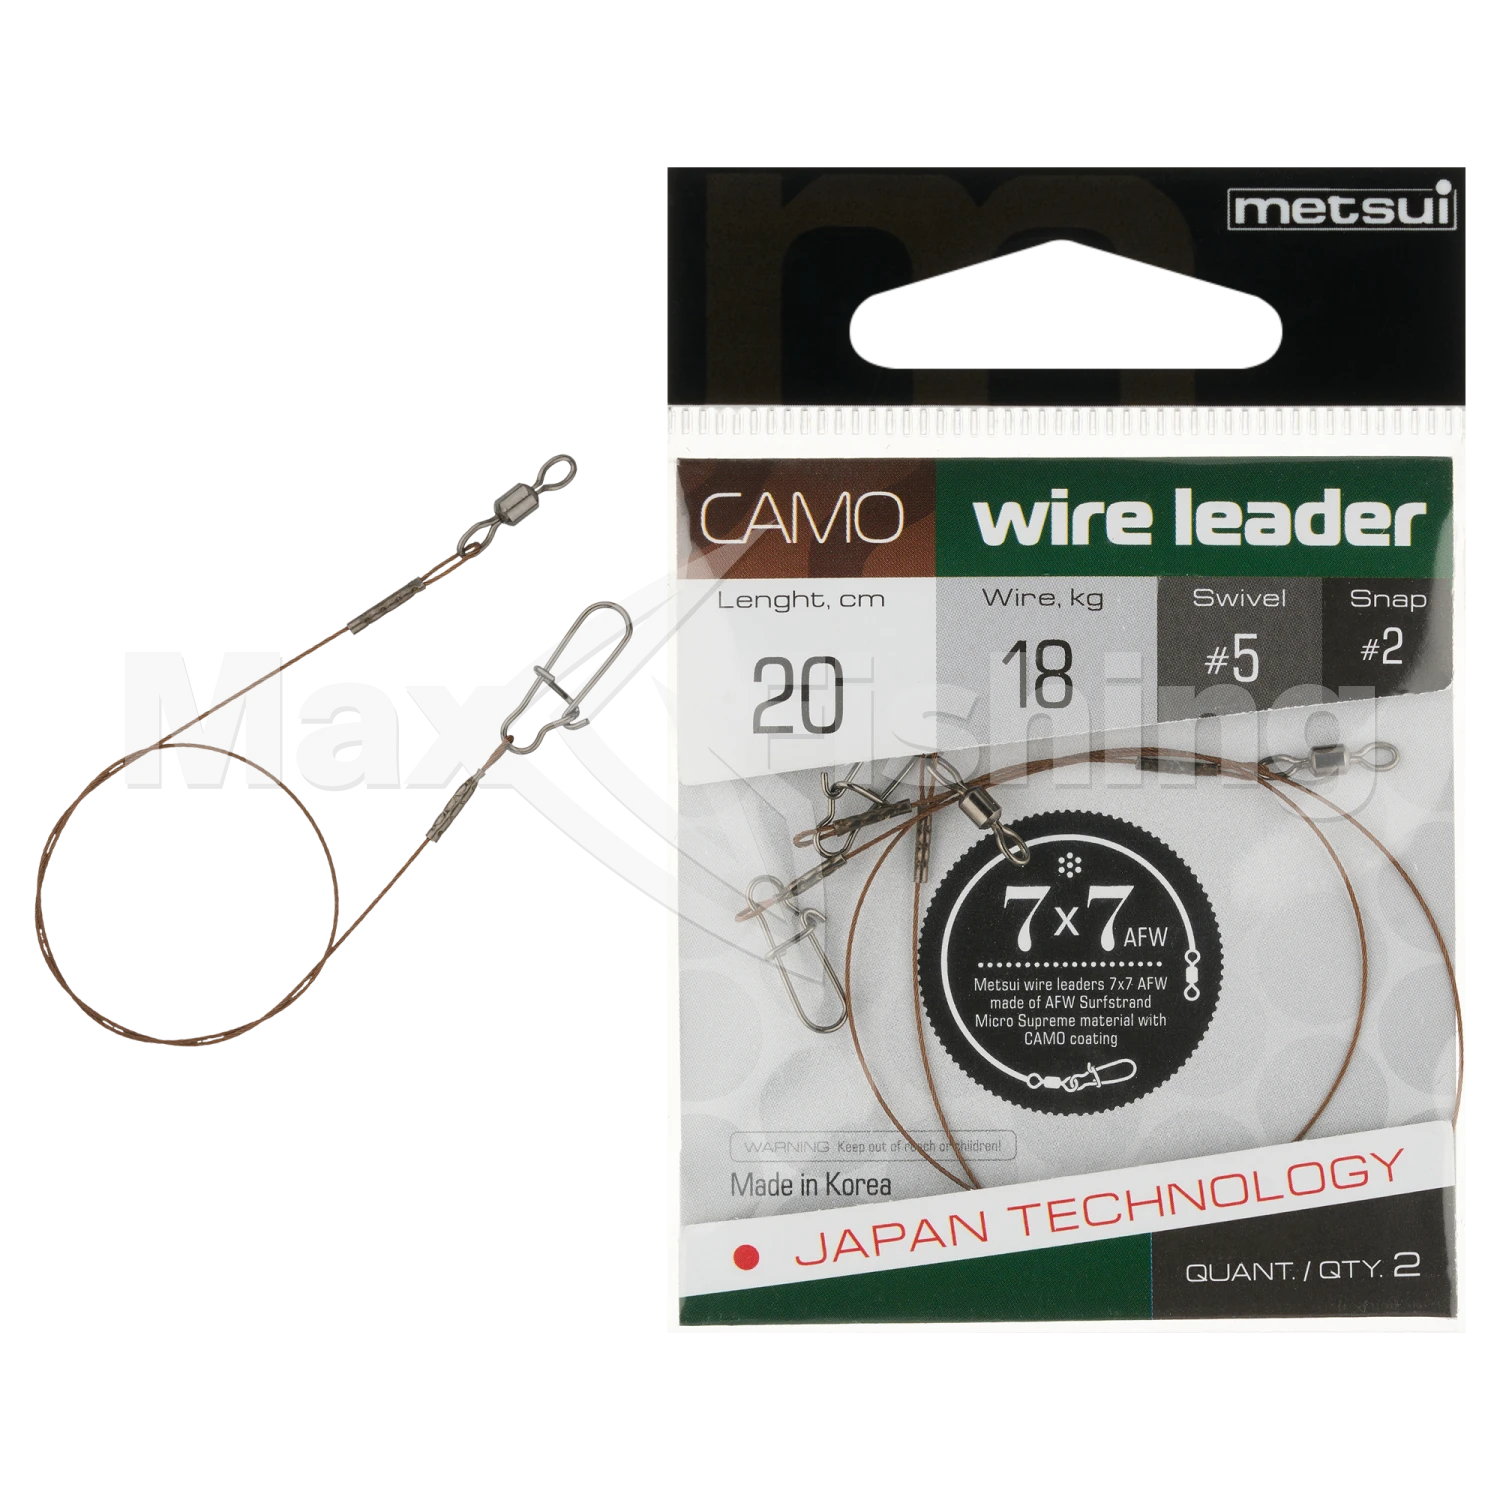 Поводок Metsui Camo Wire Leader AFW 7x7 18кг 20см